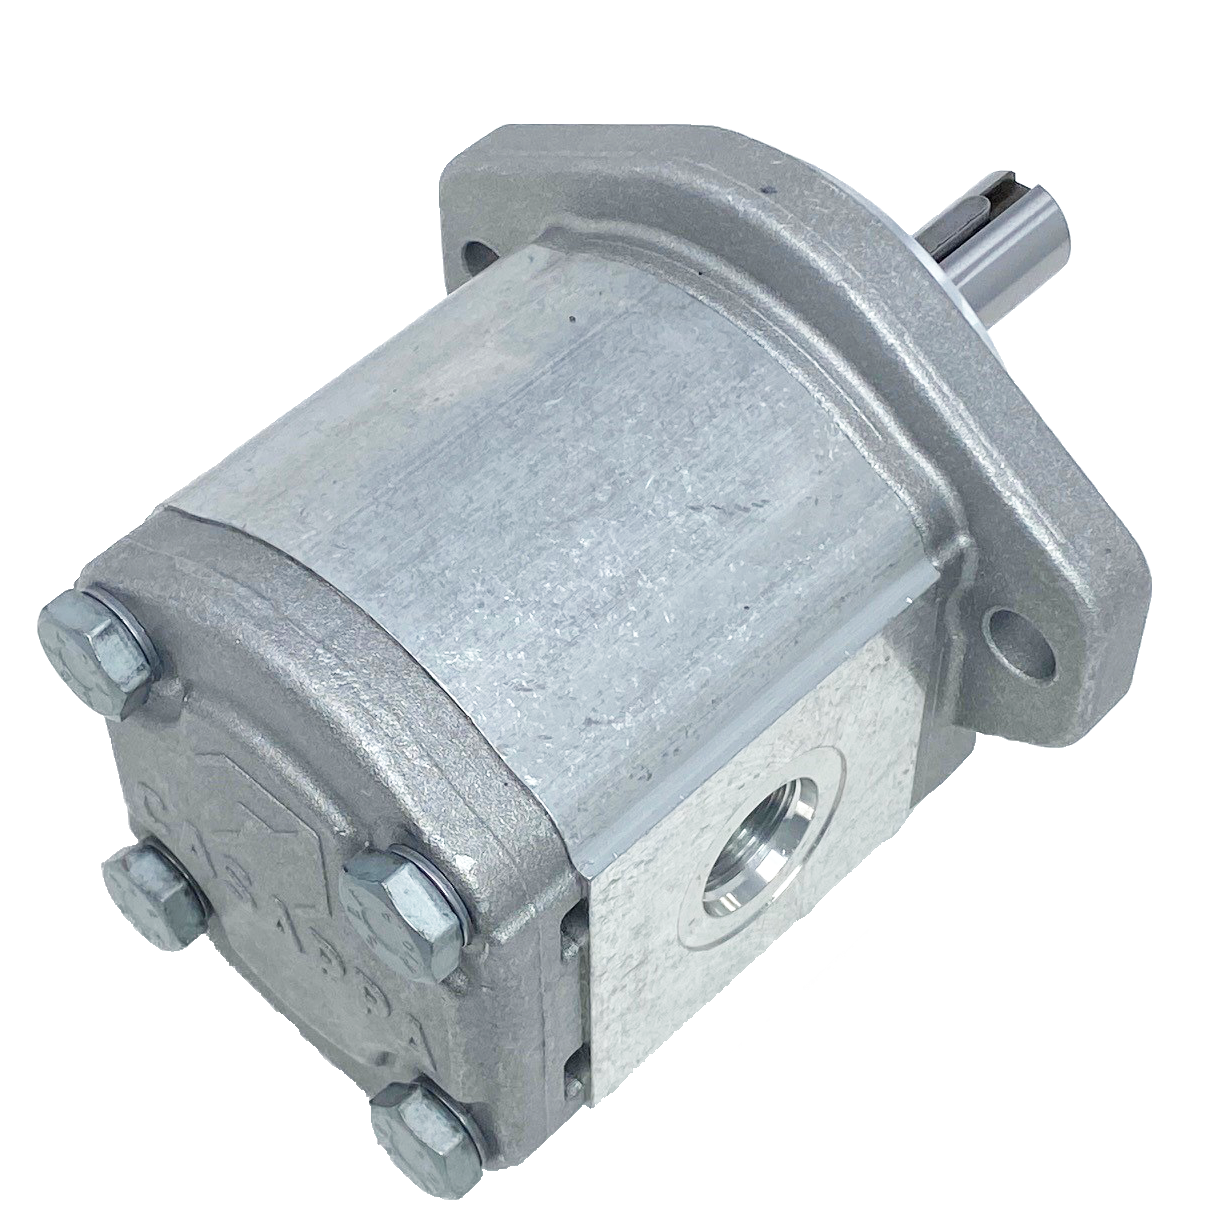 PLM20.20B0-49S1-LOC/OD-N-EL : Casappa Polaris Gear Motor, 21.14cc, 2900psi Rated, 3000RPM, Reversible Interior Drain, 3/4" Bore x 3/16" Key Shaft, SAE A 2-Bolt Flange, 0.625 (5/8") #10 SAE Inlet, 0.75 (3/4") #12 SAE Outlet, Aluminum Body & Flange